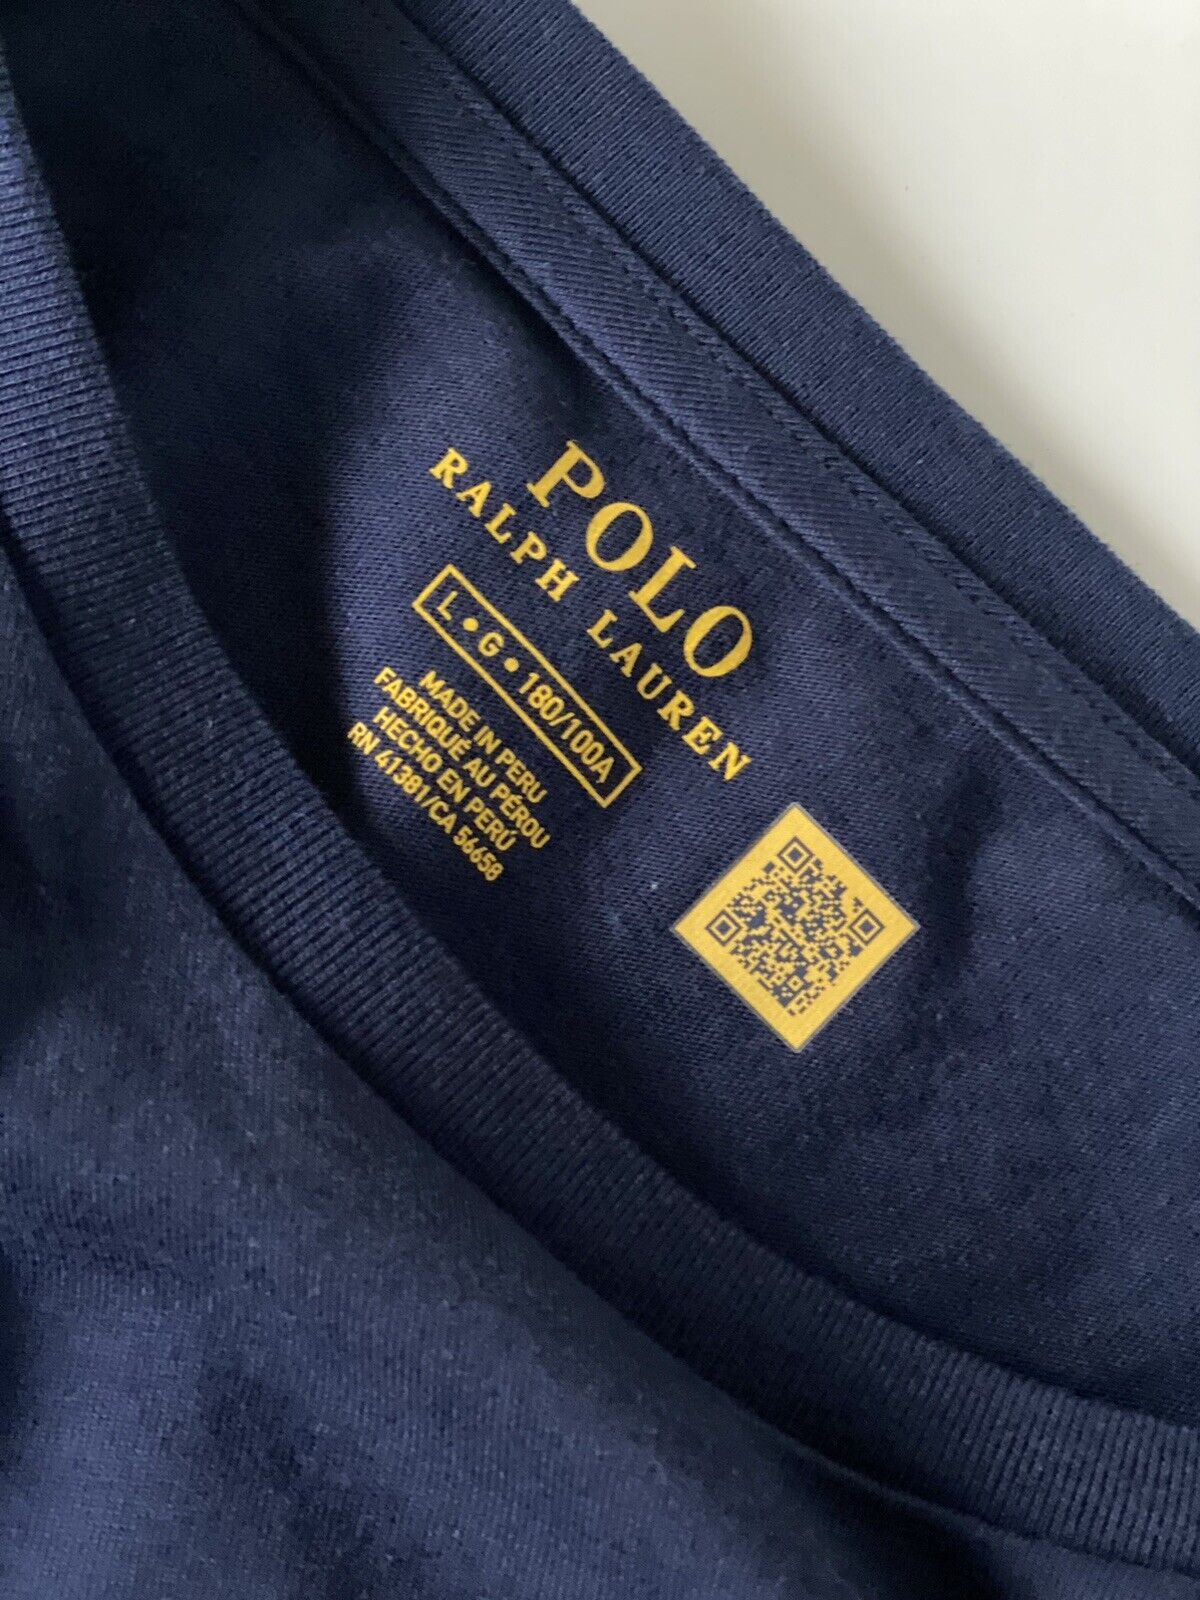 NWT Polo Ralph Lauren NY Футболка с короткими рукавами и логотипом P-Wing, синяя, большая 